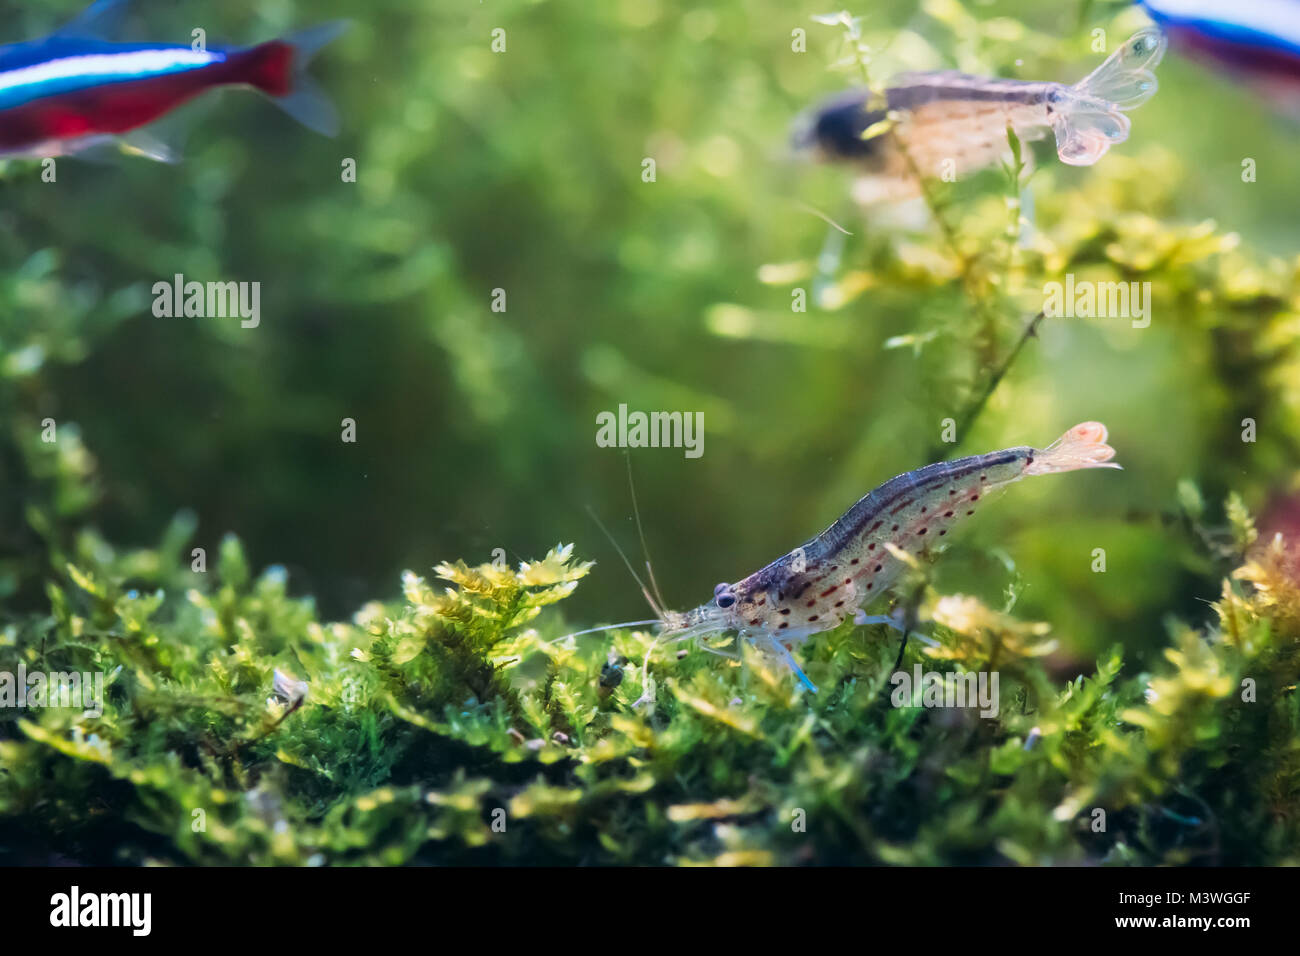 Amano Shrimp Or Japanese Shrimp Swimming In Water. Stock Photo